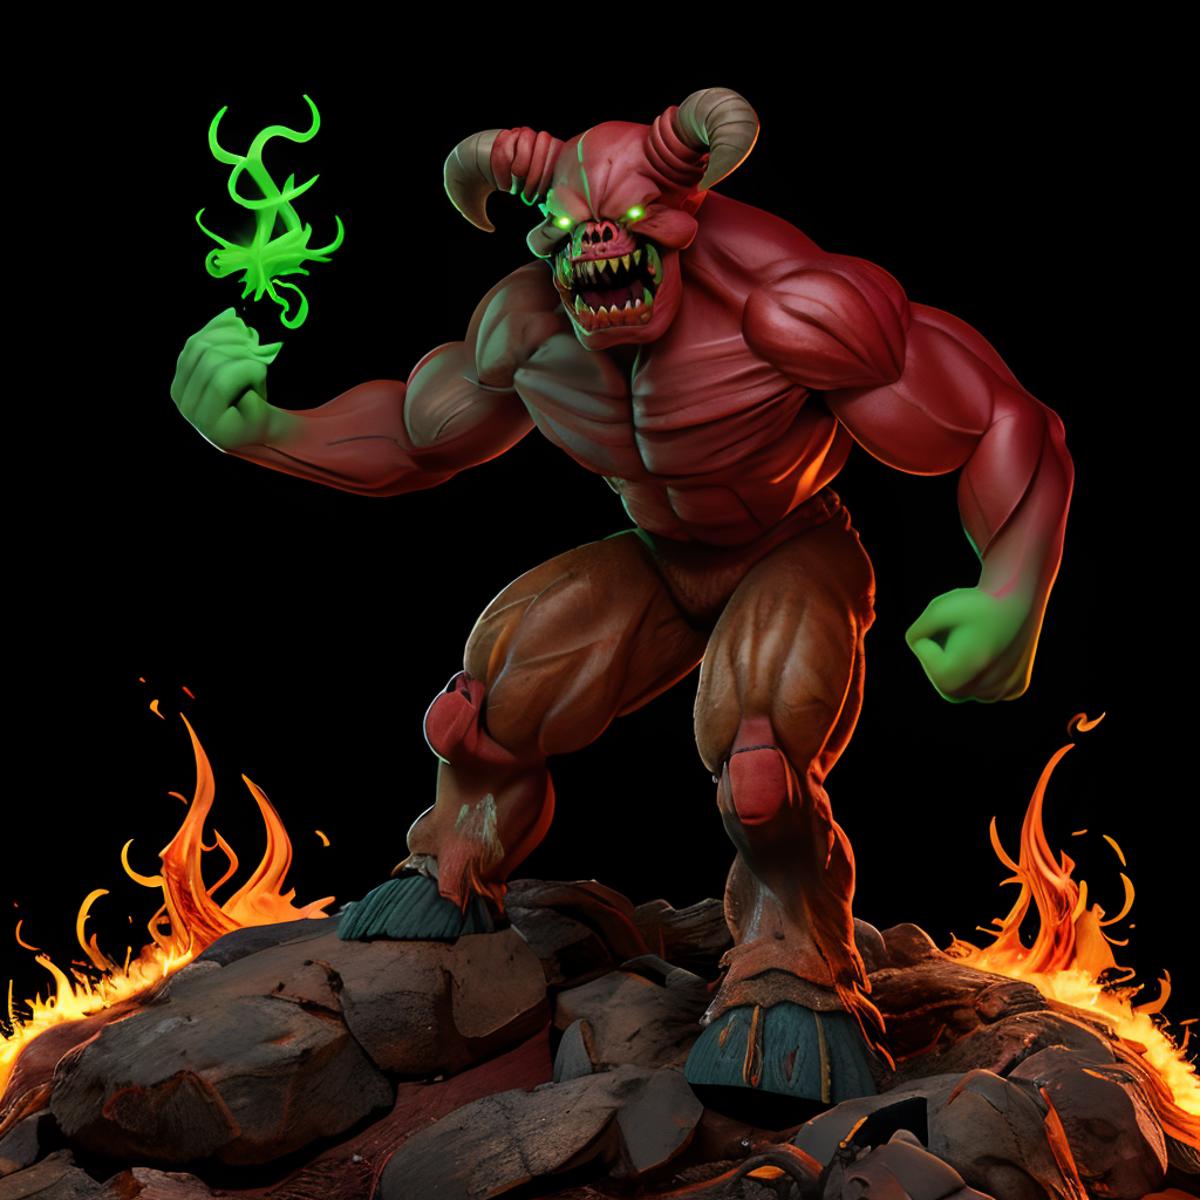 Classic Doom Baron of Hell image by wikkitikki